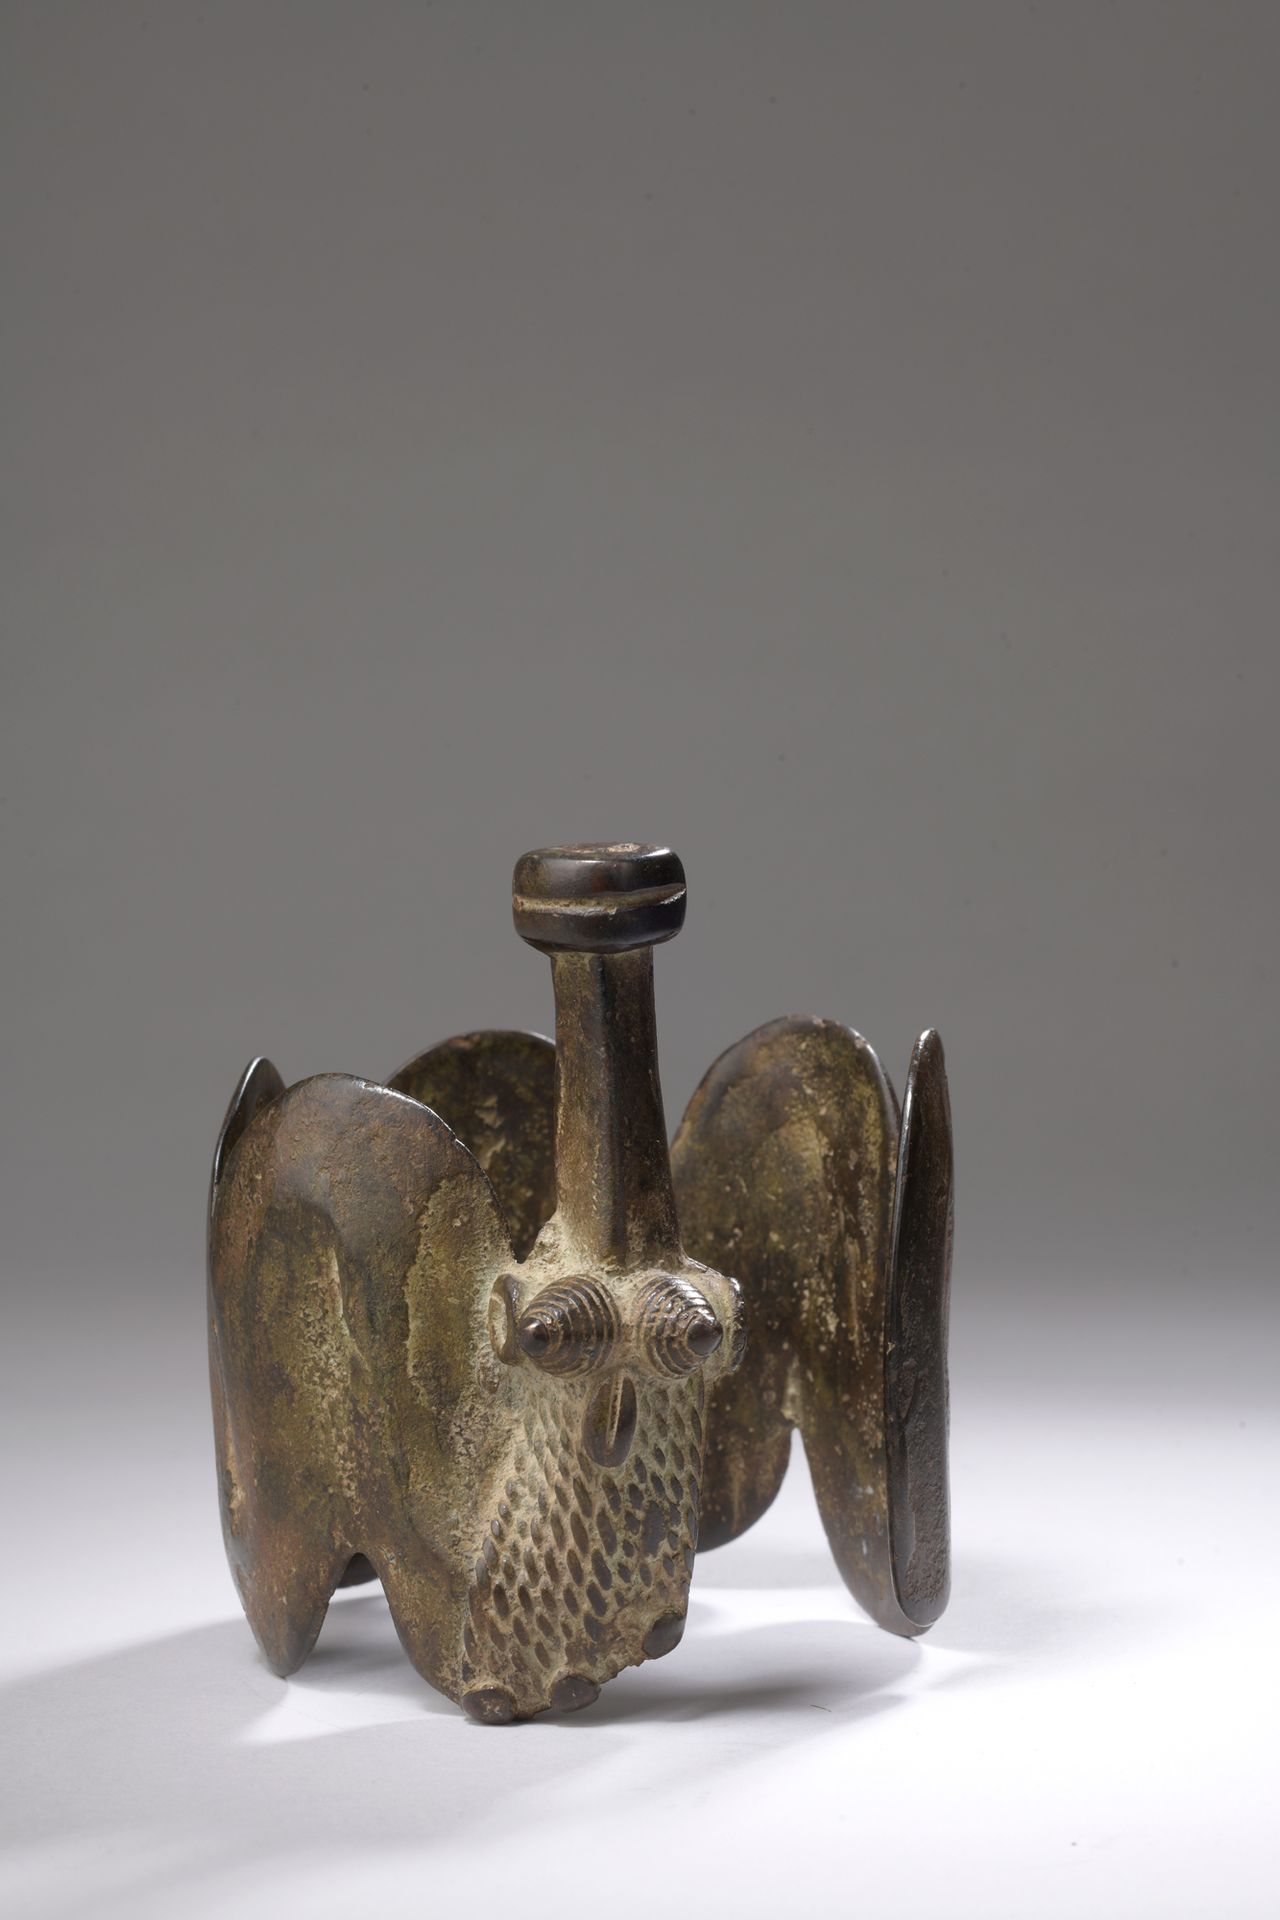 Null 布基纳法索DEKOGGORO GAN手镯

铜合金。

D. 8,5 H. 10 cm

手镯表现了一条身体起伏的蛇，动物的头部侧面有突出的眼睛。

&hellip;